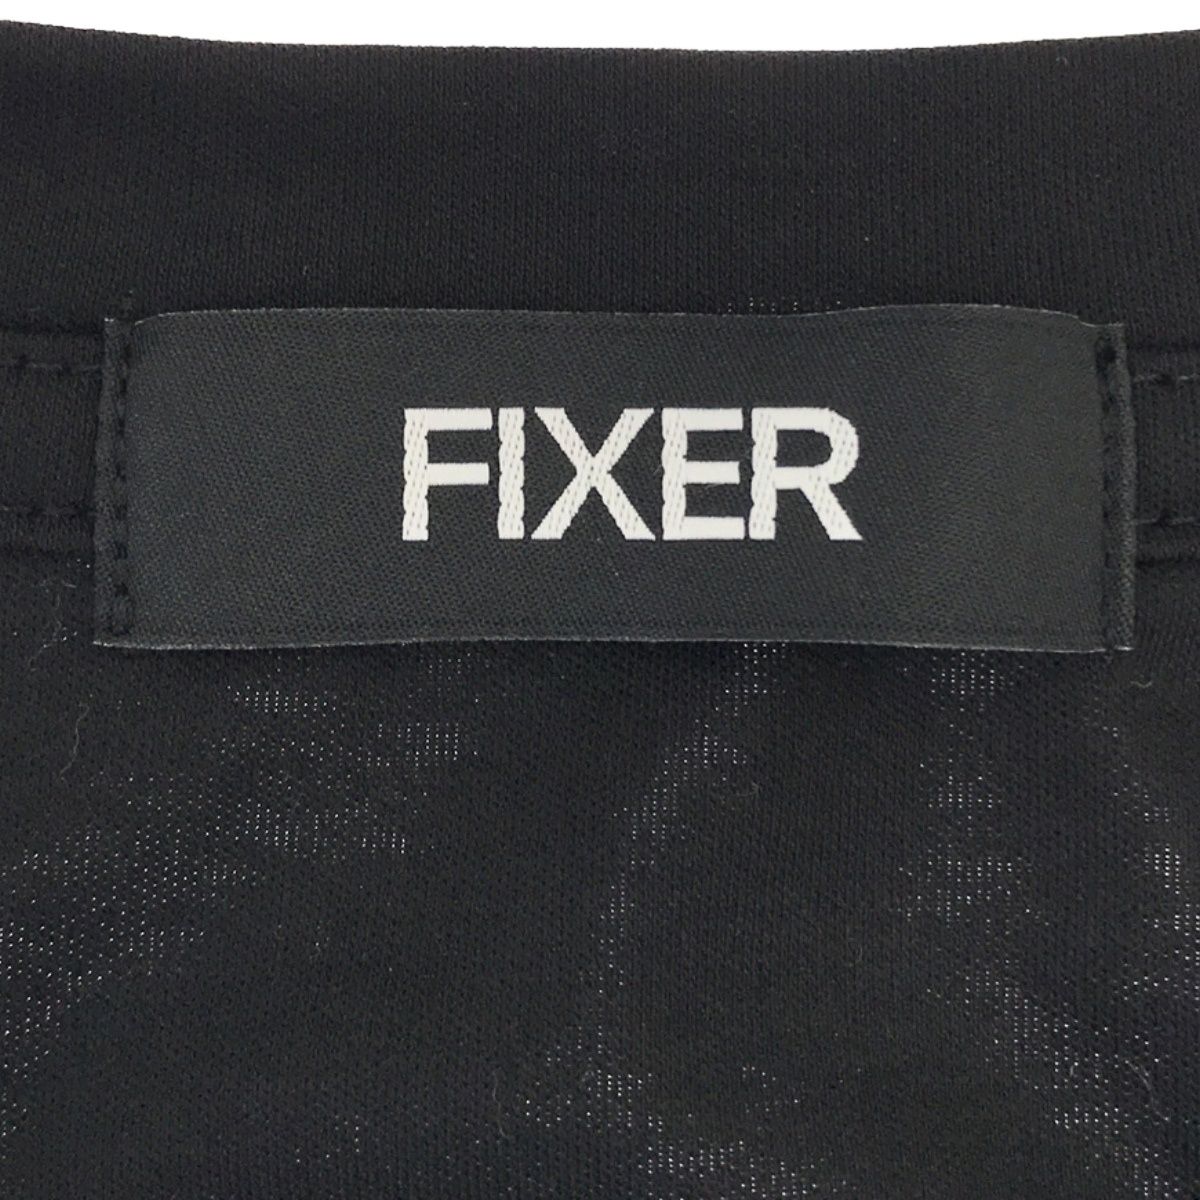 FIXER フィクサー FIXER ARE HERE プリントTシャツ ブラック M FTS-05